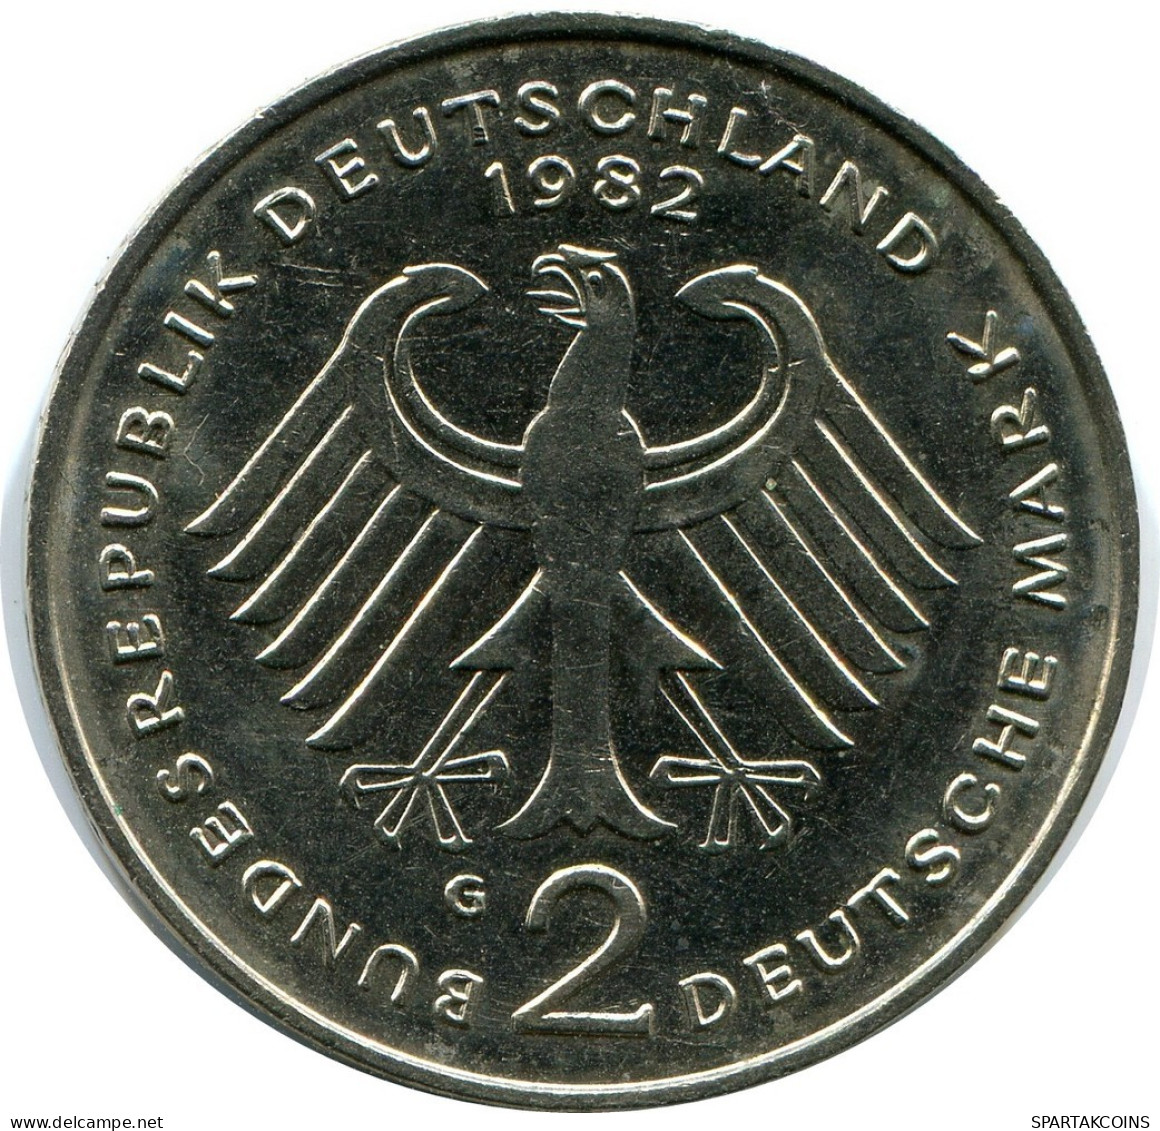 2 DM 1982 G T.HEUSS WEST & UNIFIED GERMANY Coin #AZ439.U.A - 2 Marcos